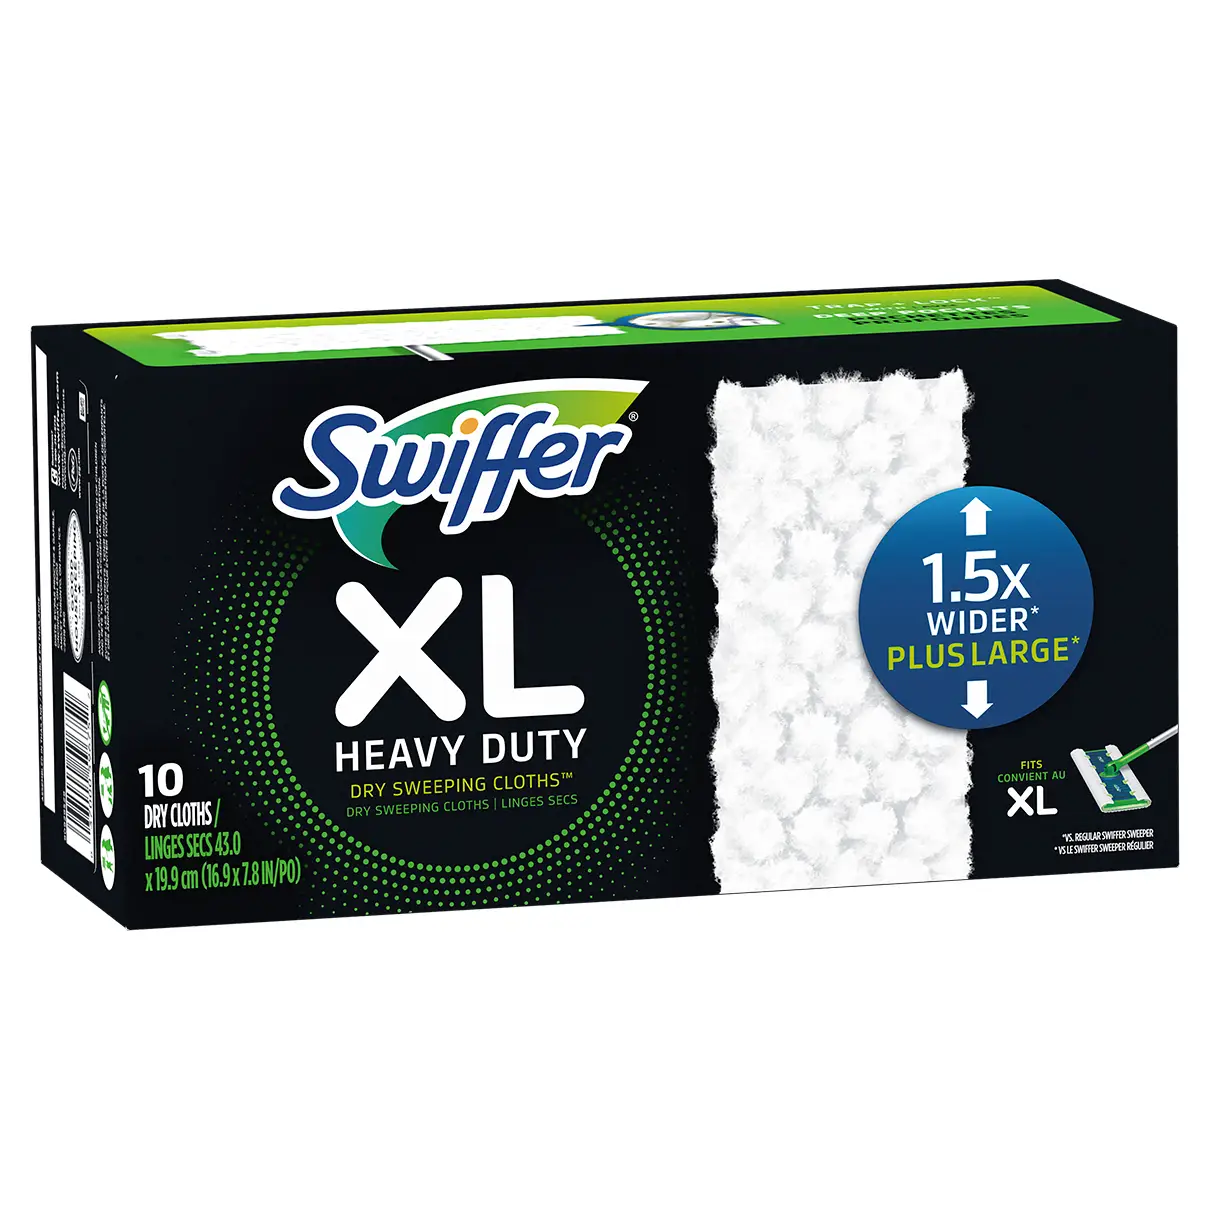 Swiffer Sweeper Heavy Duty Dry Sweeping Cloths, 50 ct.